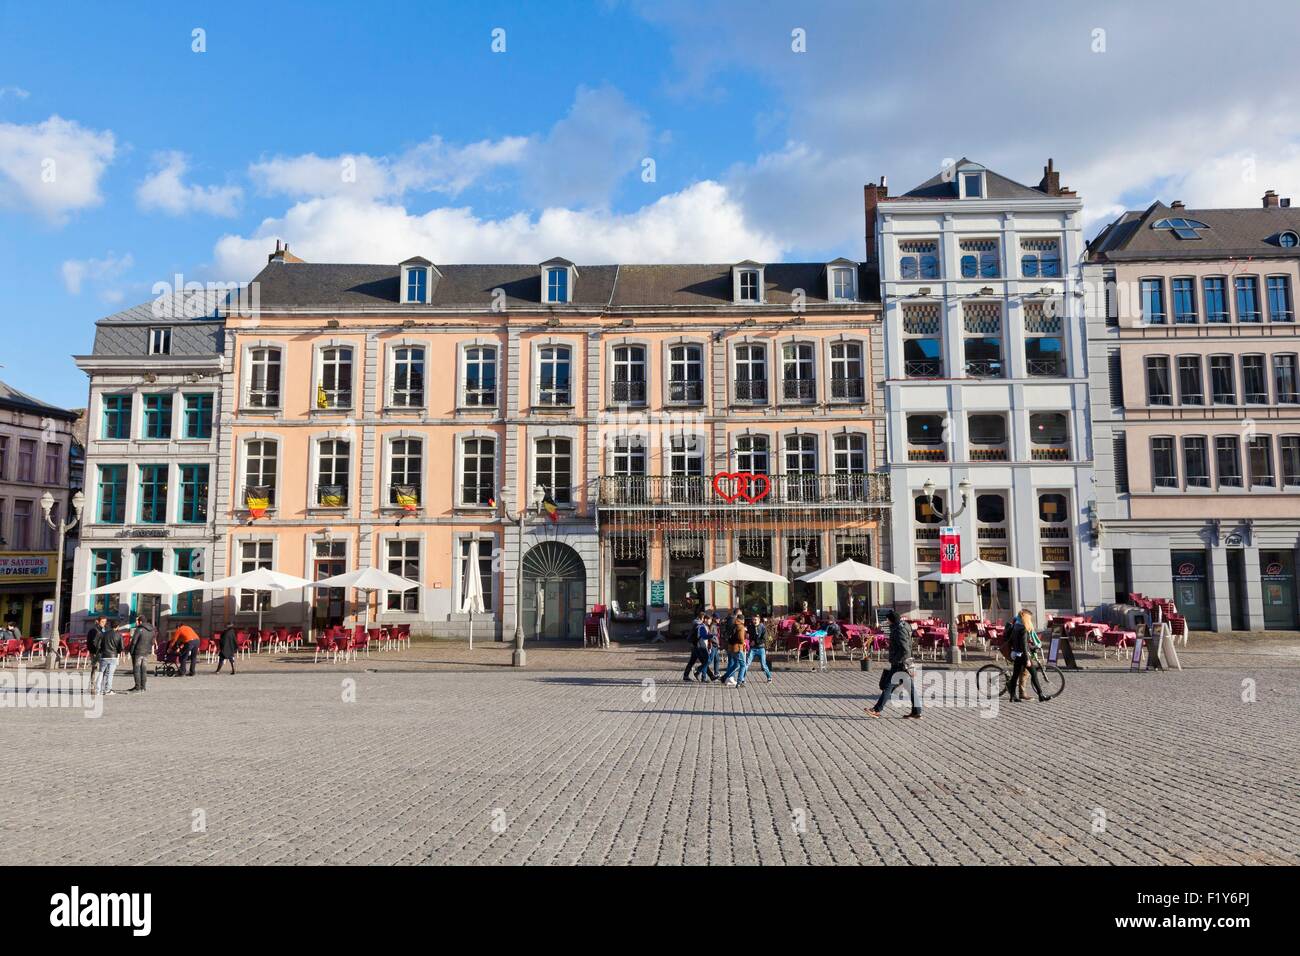 Belgium, Wallonia, Hainaut province, Mons, European Capital of Culture 2015, historical center, grand place Stock Photo